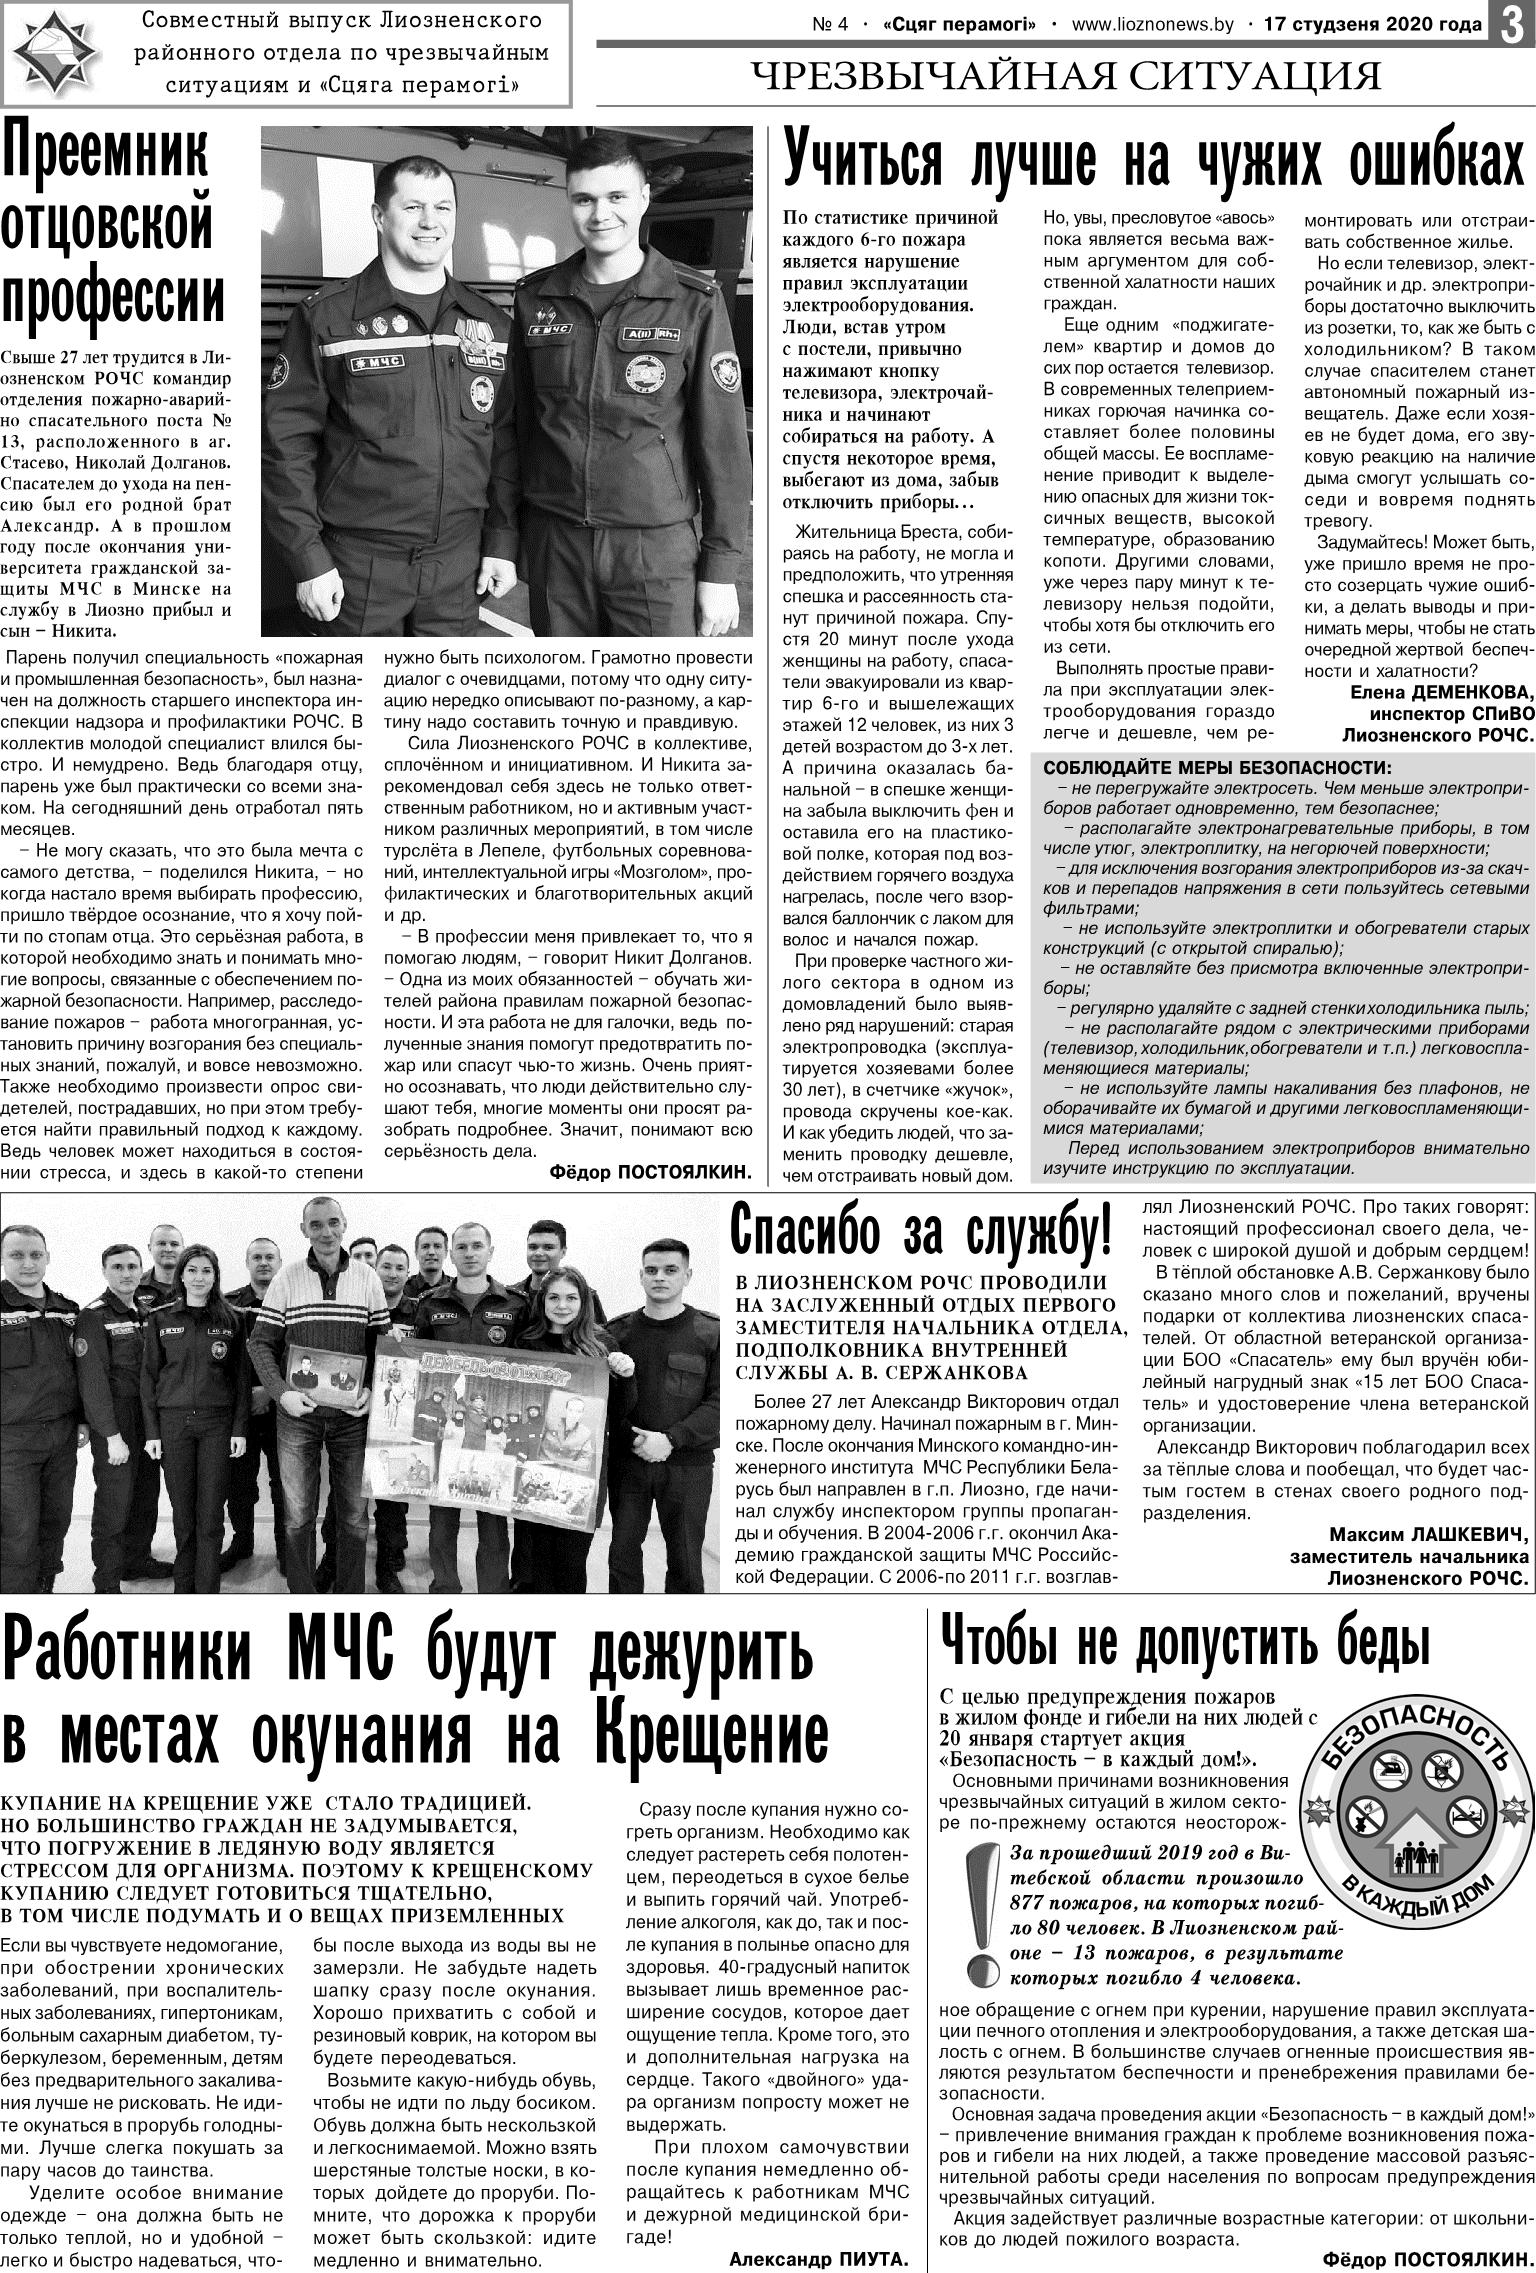 Газета "Сцяг перамогi" №4 от 17.01.2020 тематическая страница 